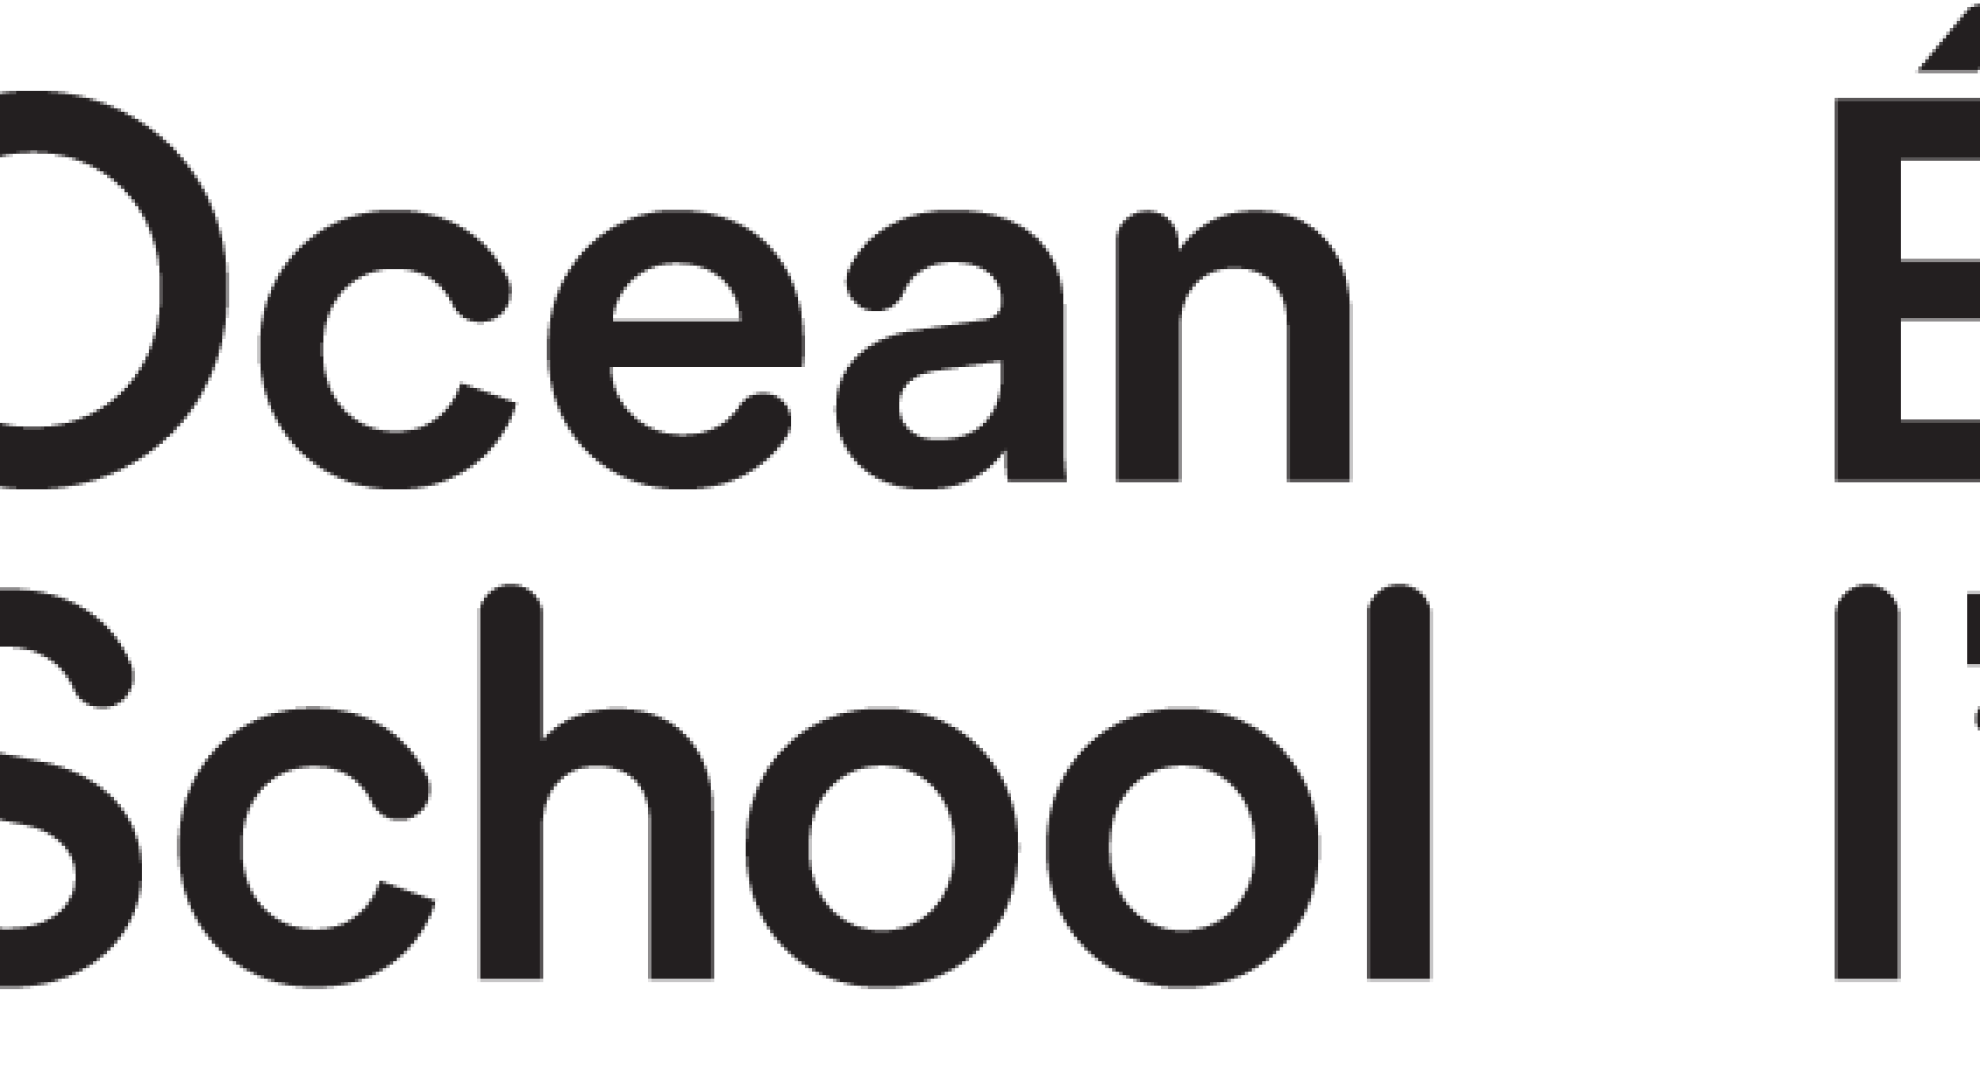 Ocean School logo